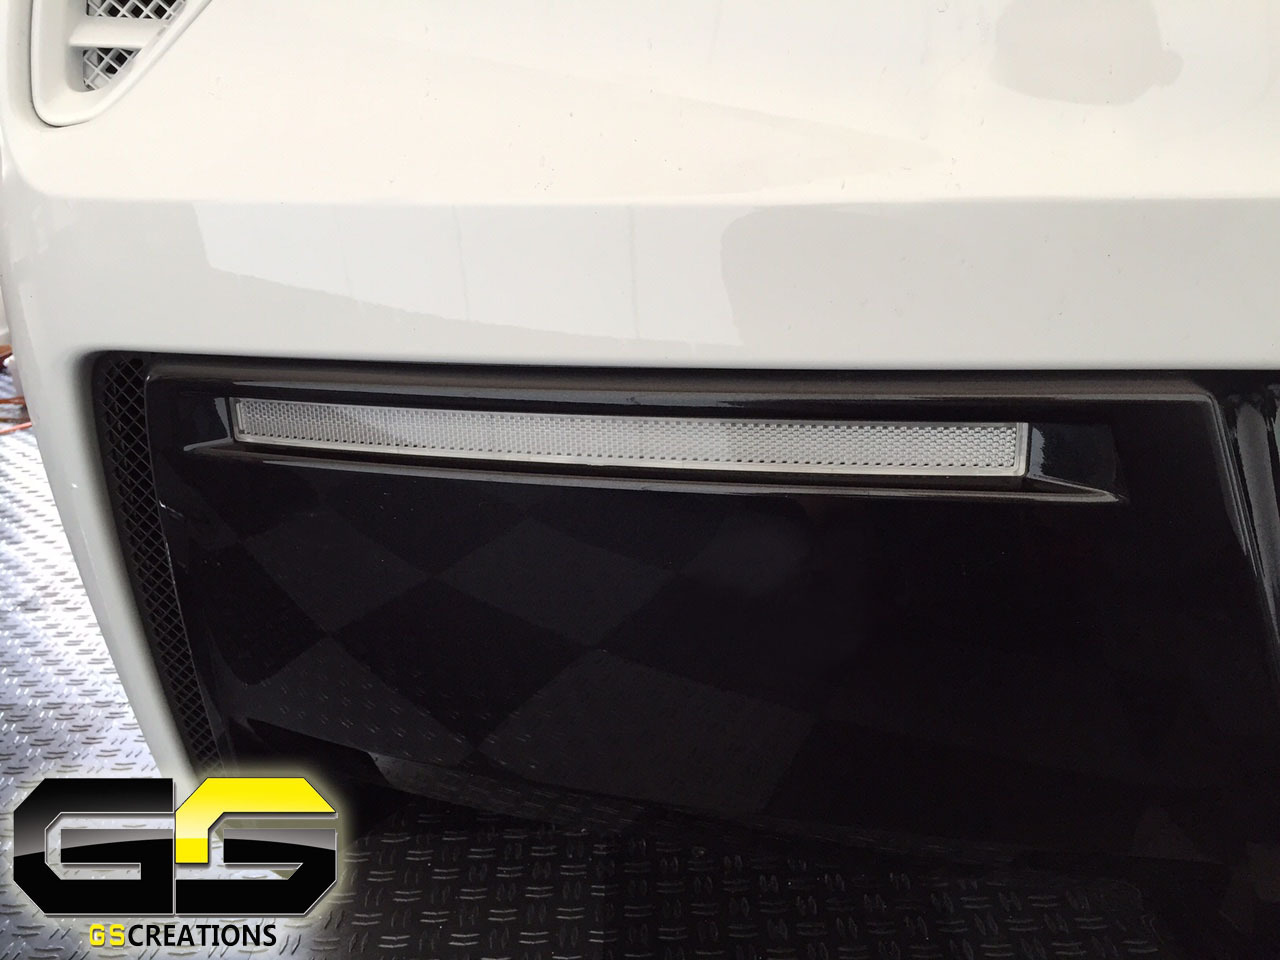 2014+ C7 Corvette GSCreations Clear Rear Bumper Reflector Markers - 2 Piece Kit